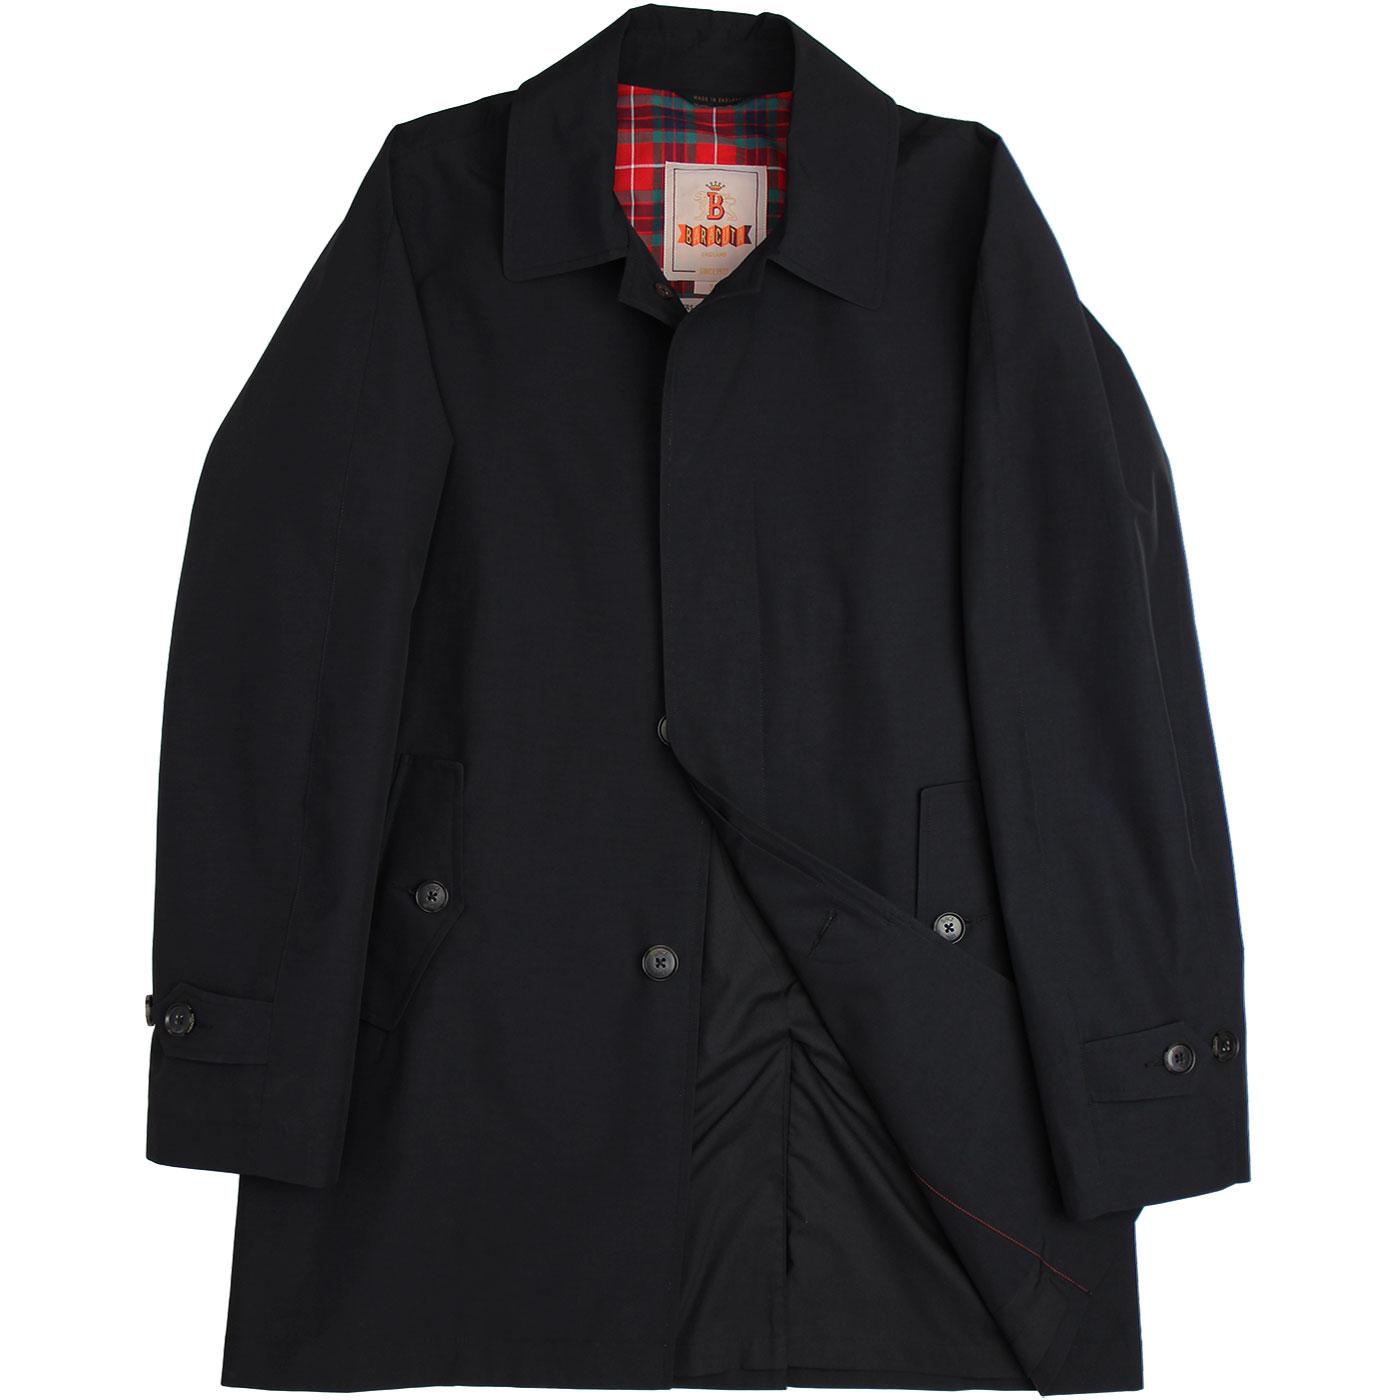 BARACUTA G10 Men's Made in England Mod Mac Coat Black